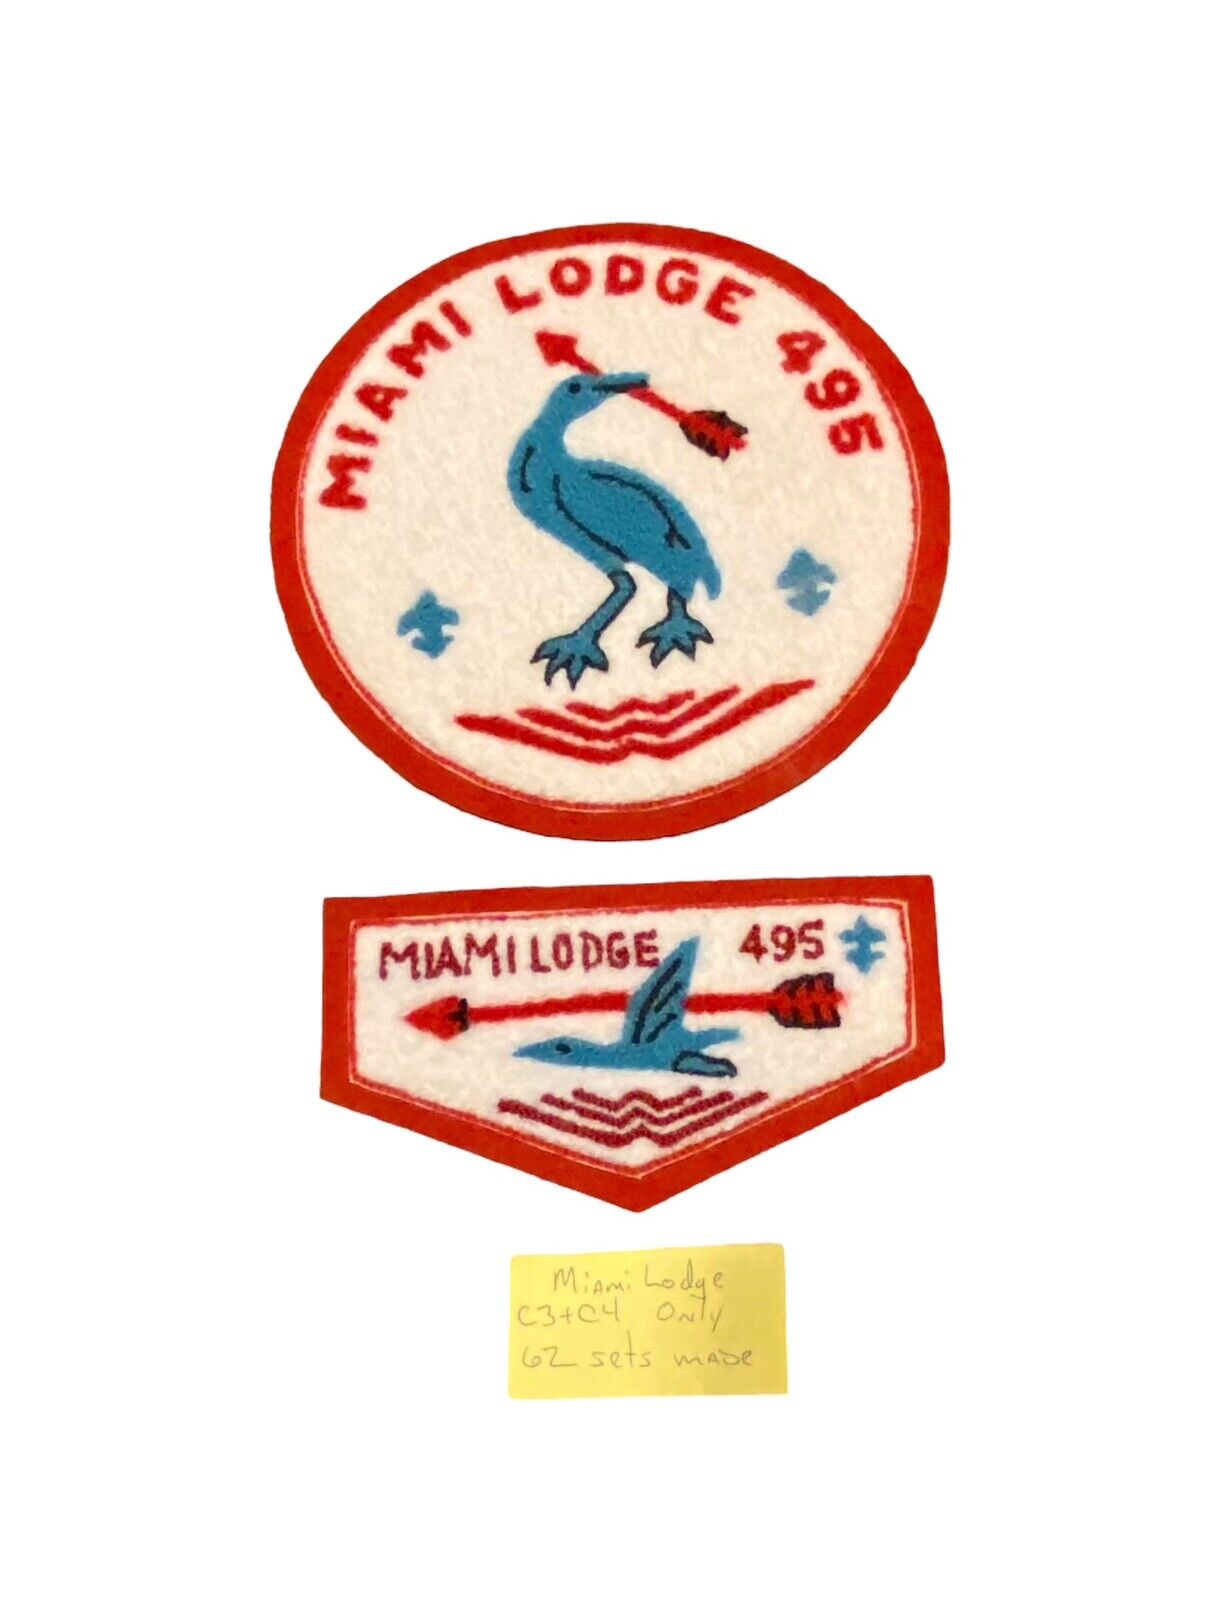 BSA Miami OA Lodge 495 Scout Chenille Jacket Patch C-4 10-62 2/88+C-3 10-81 2/88